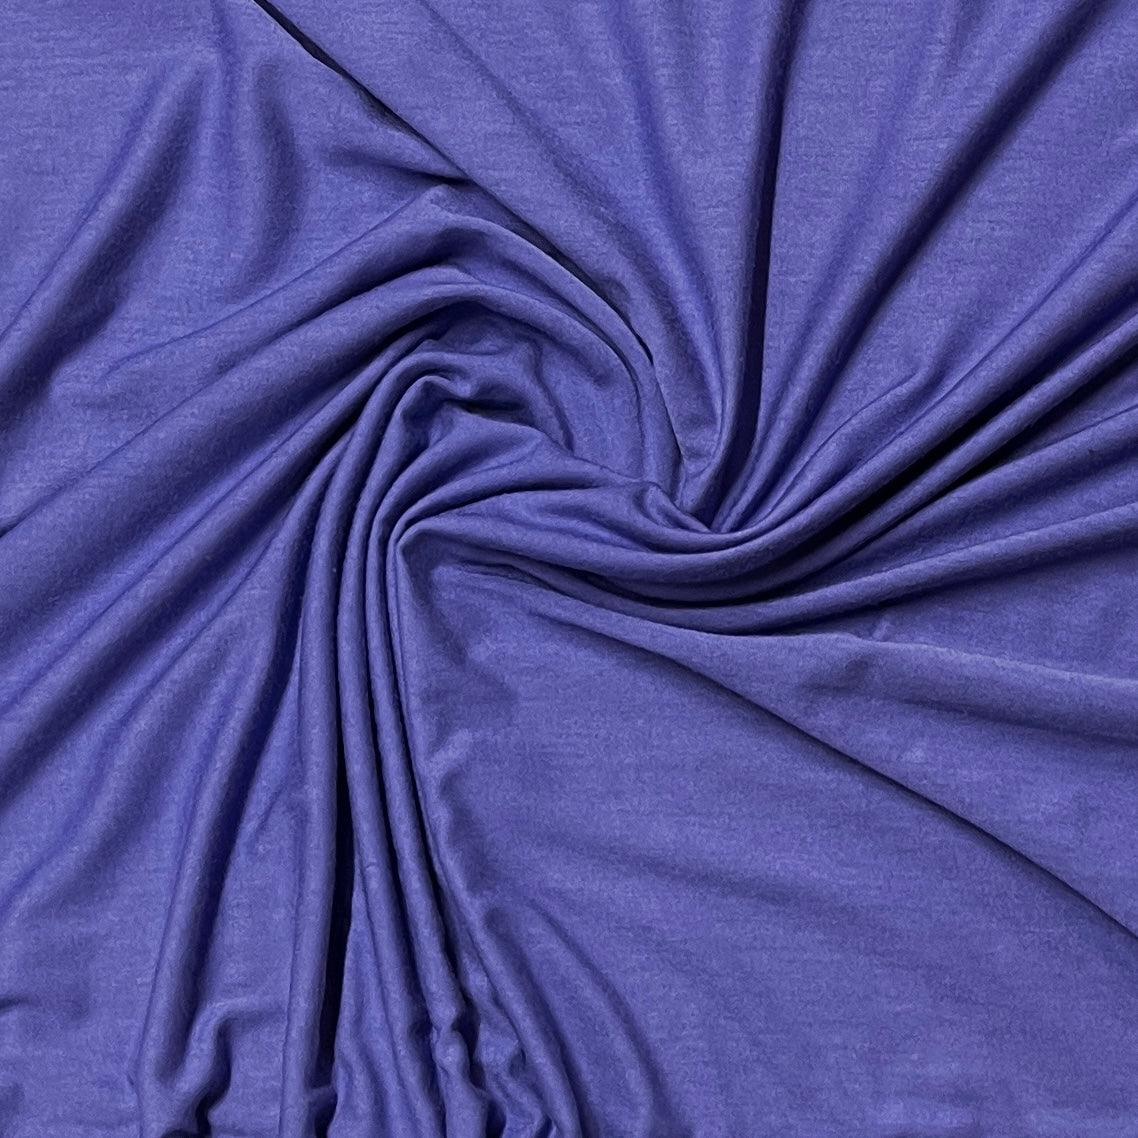 Iris Bamboo/Spandex Jersey Fabric - 240 GSM, $9.35/yd - Rolls - Nature's Fabrics